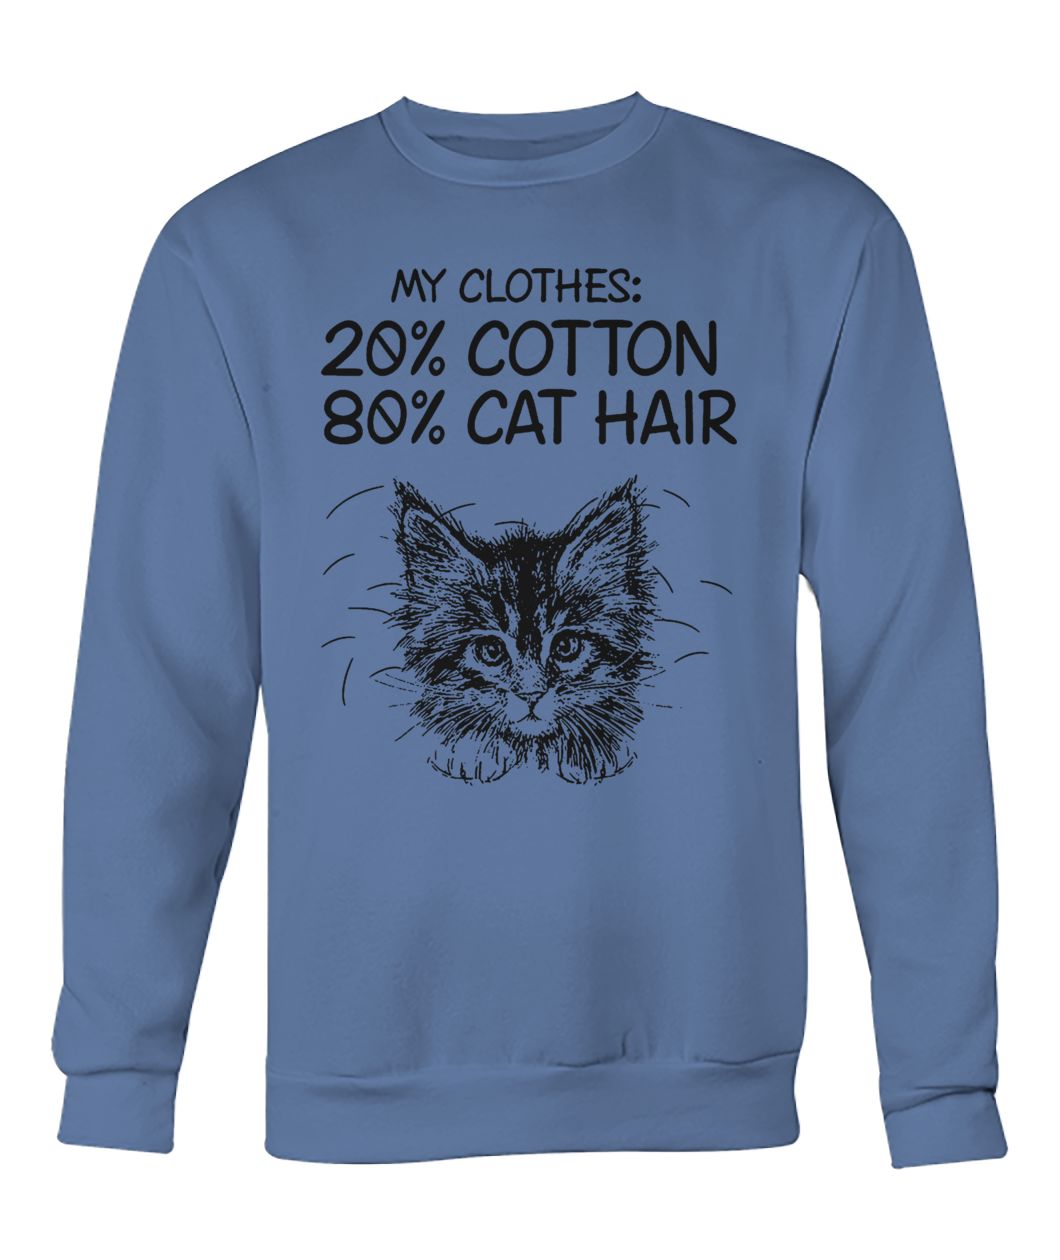 My clothes 20% cotton 80% cat hair crew neck sweatshirt